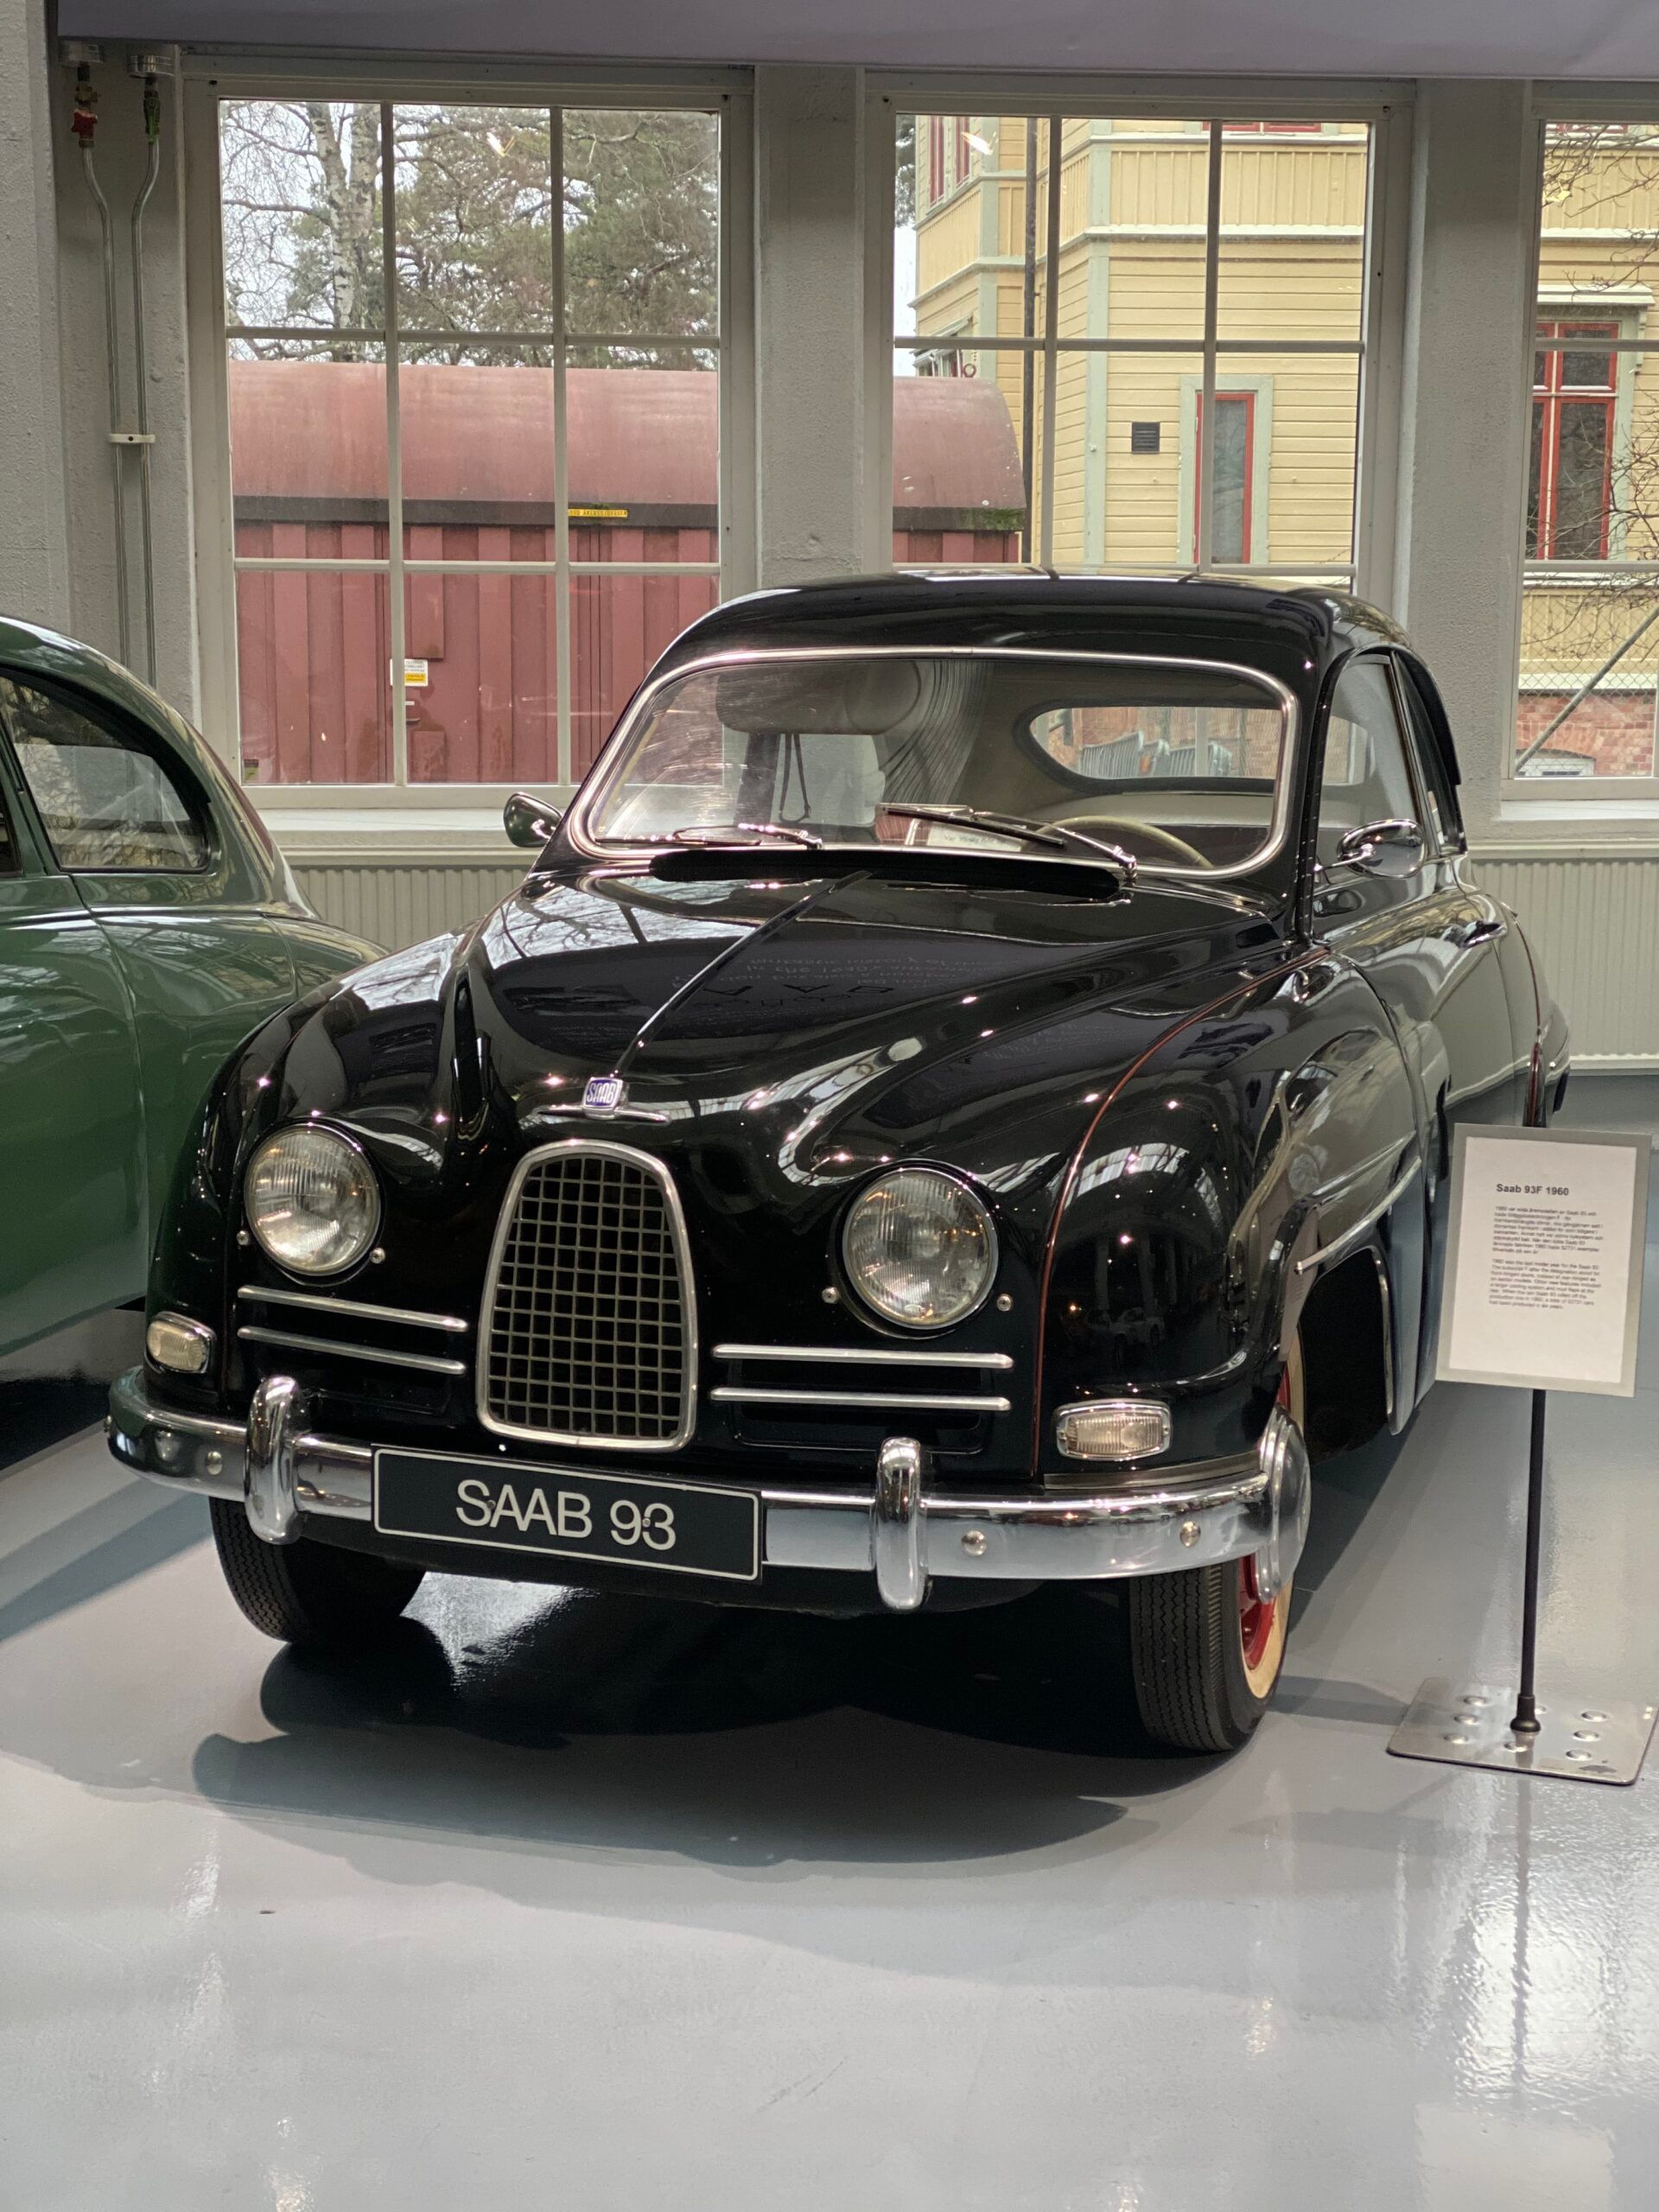 Cars on display at SAAB car museum